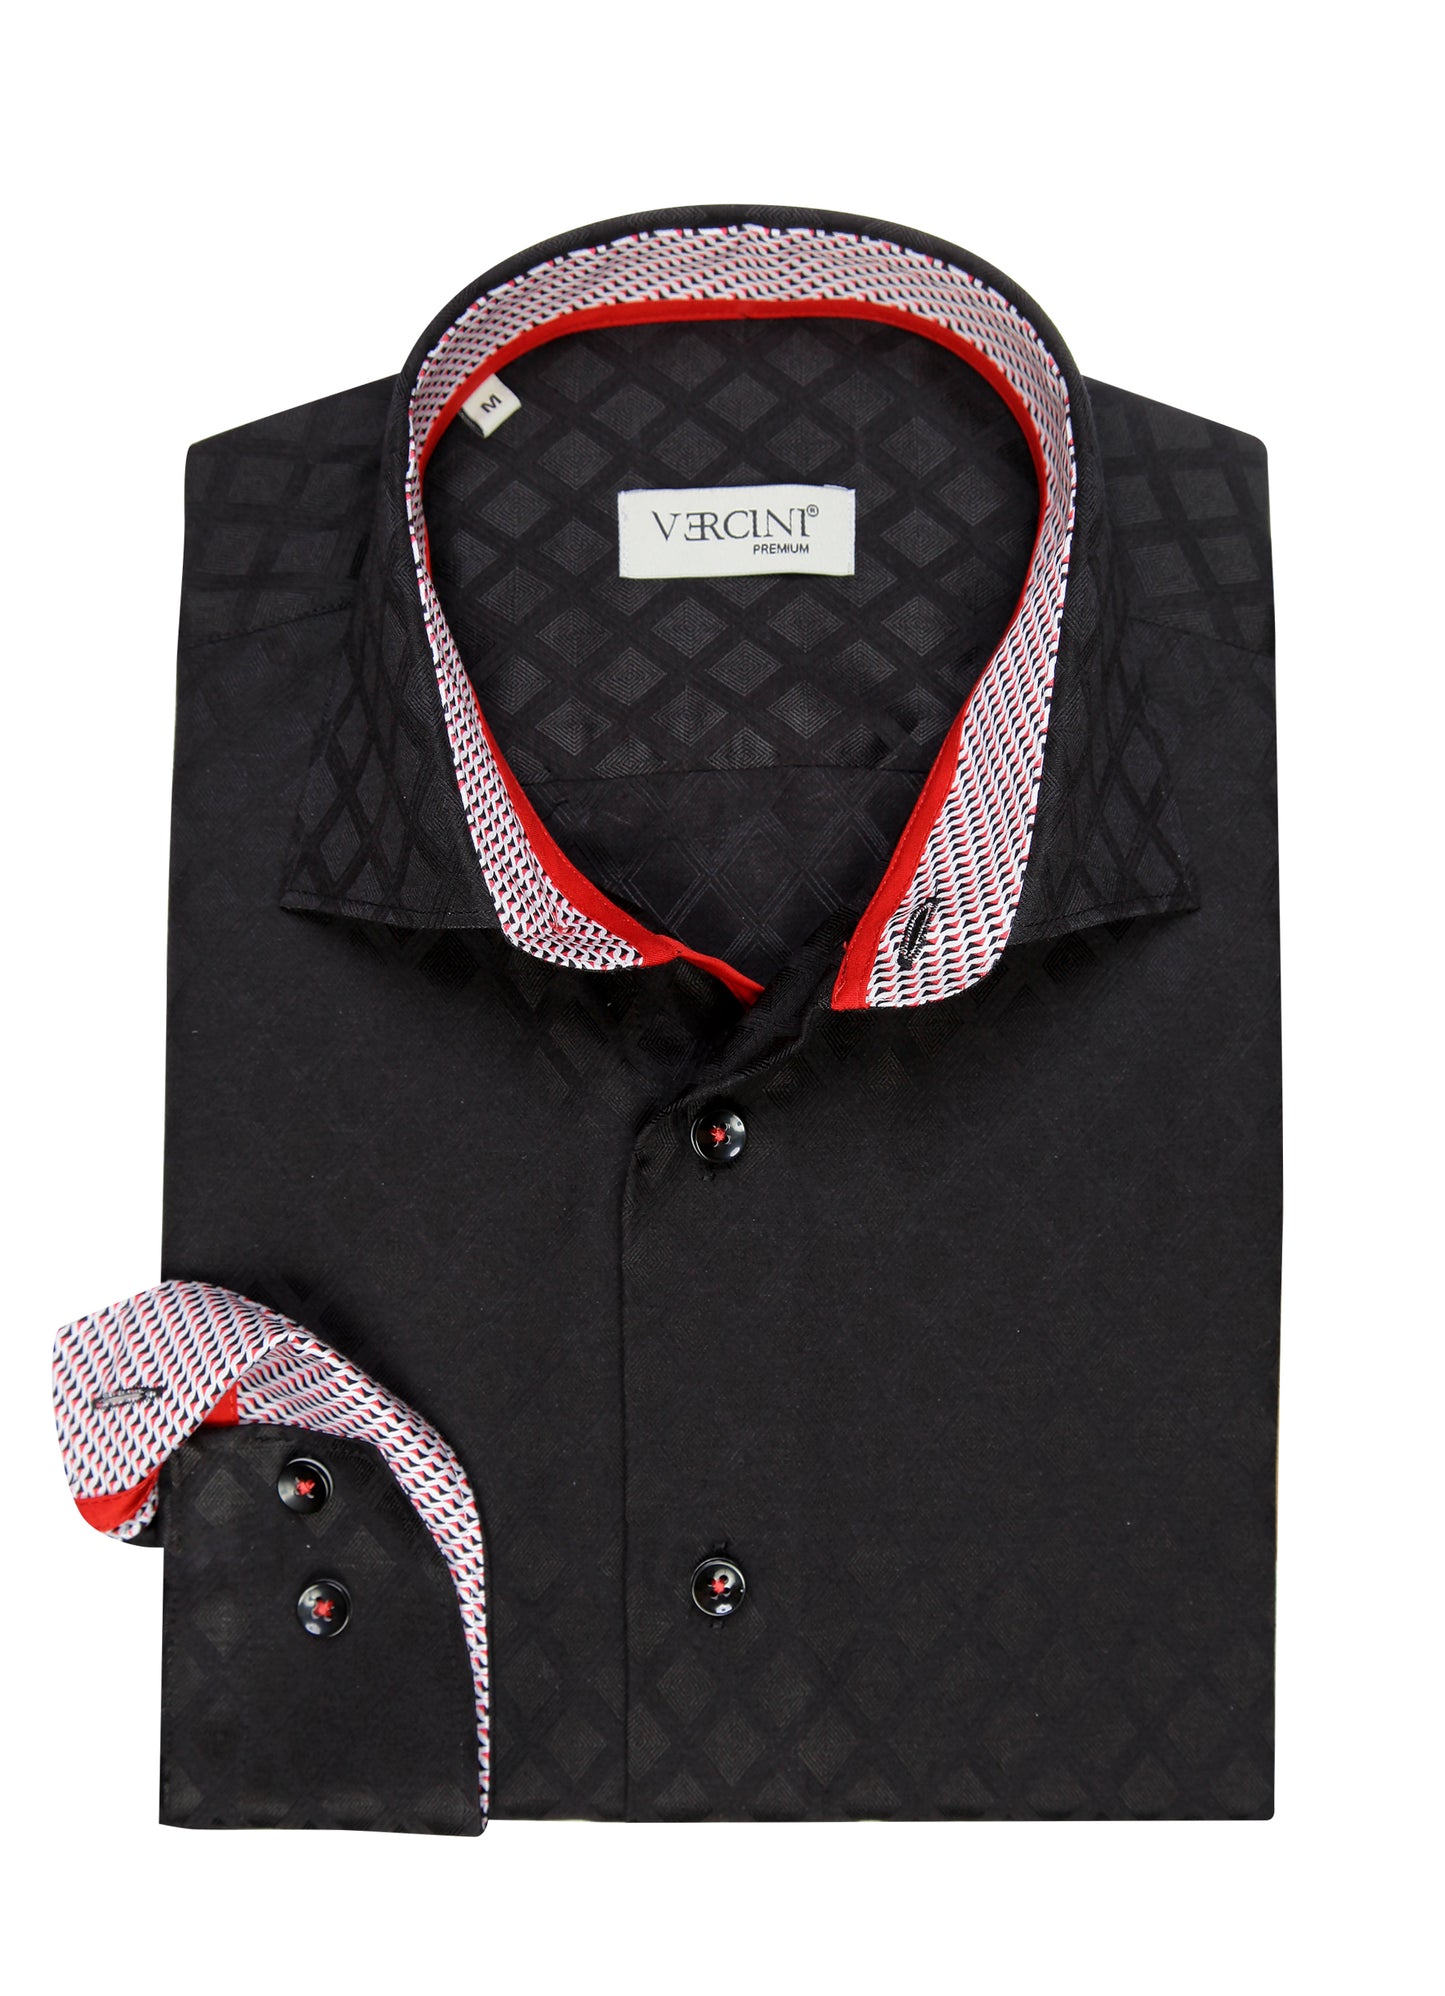 Cosmic Splash Variations Casual Shirt DRESS SHIRTS On Sale 30% Off Vercini